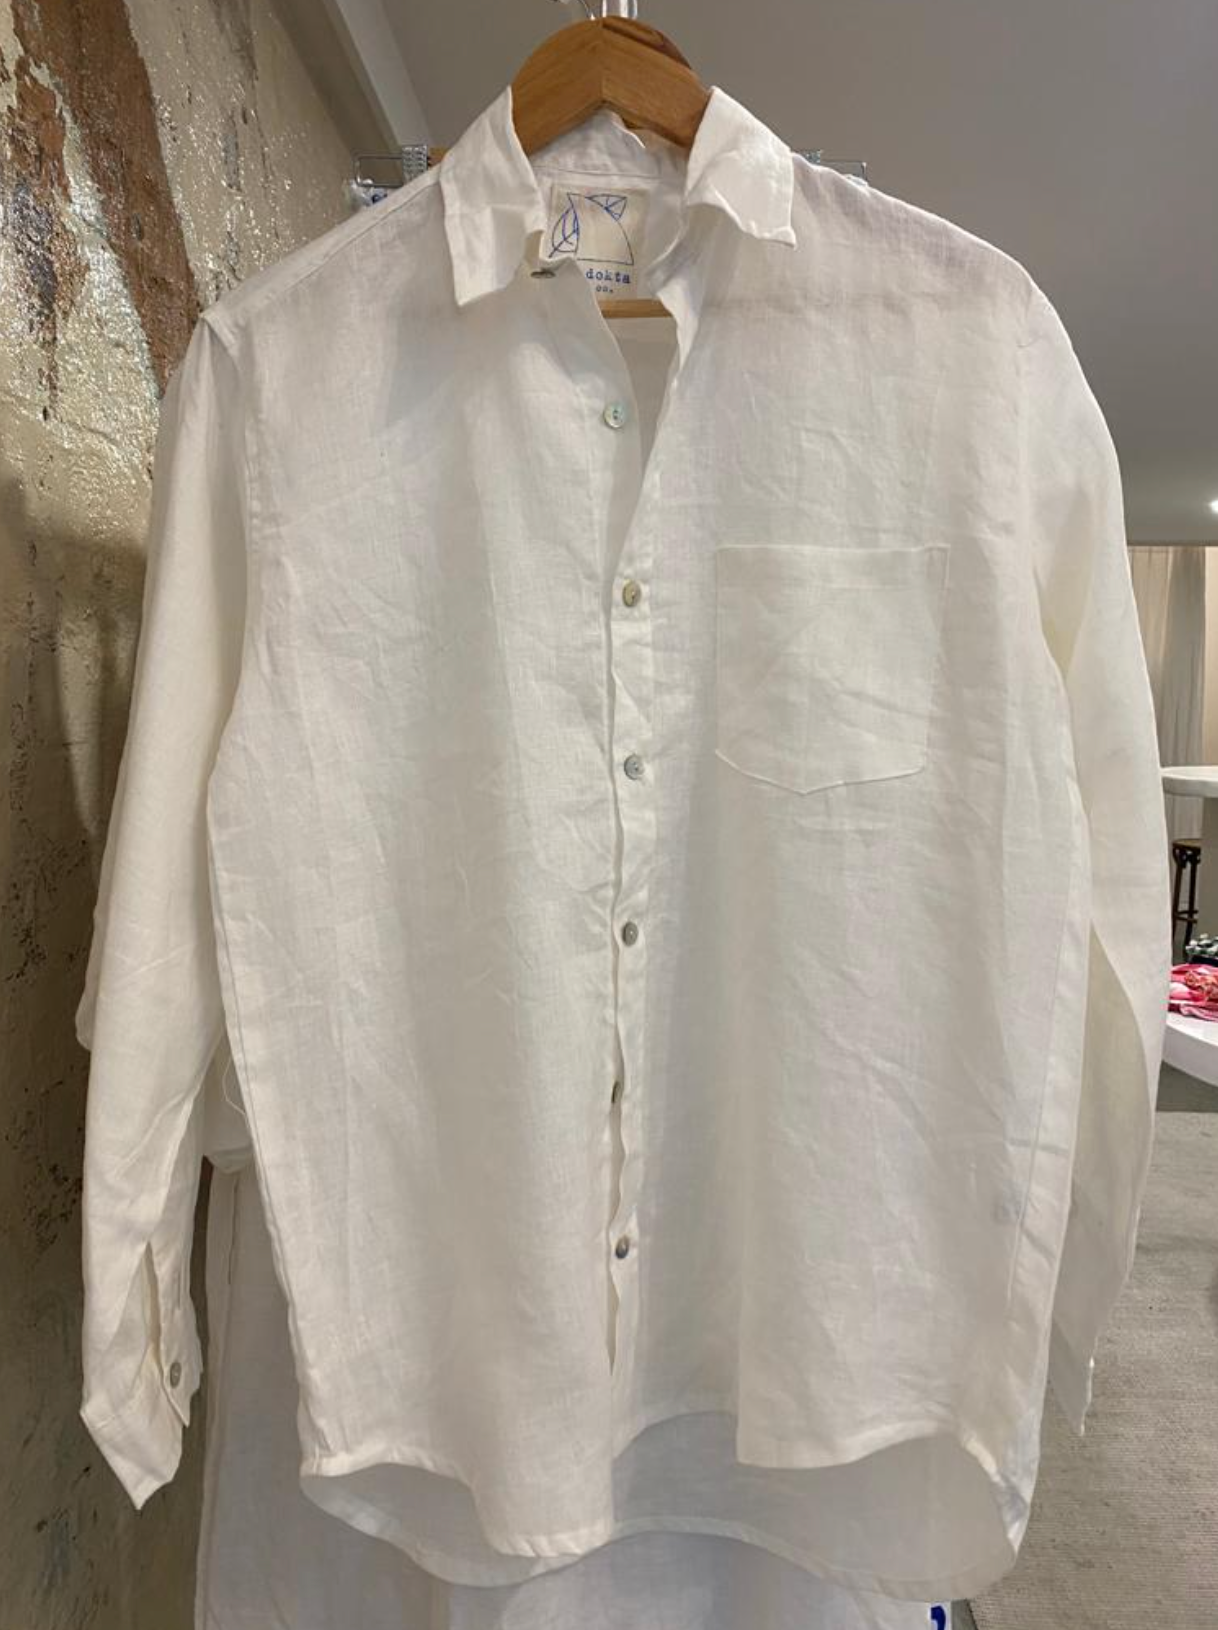 SALE Crandokta Linen Long Sleeved Shirt